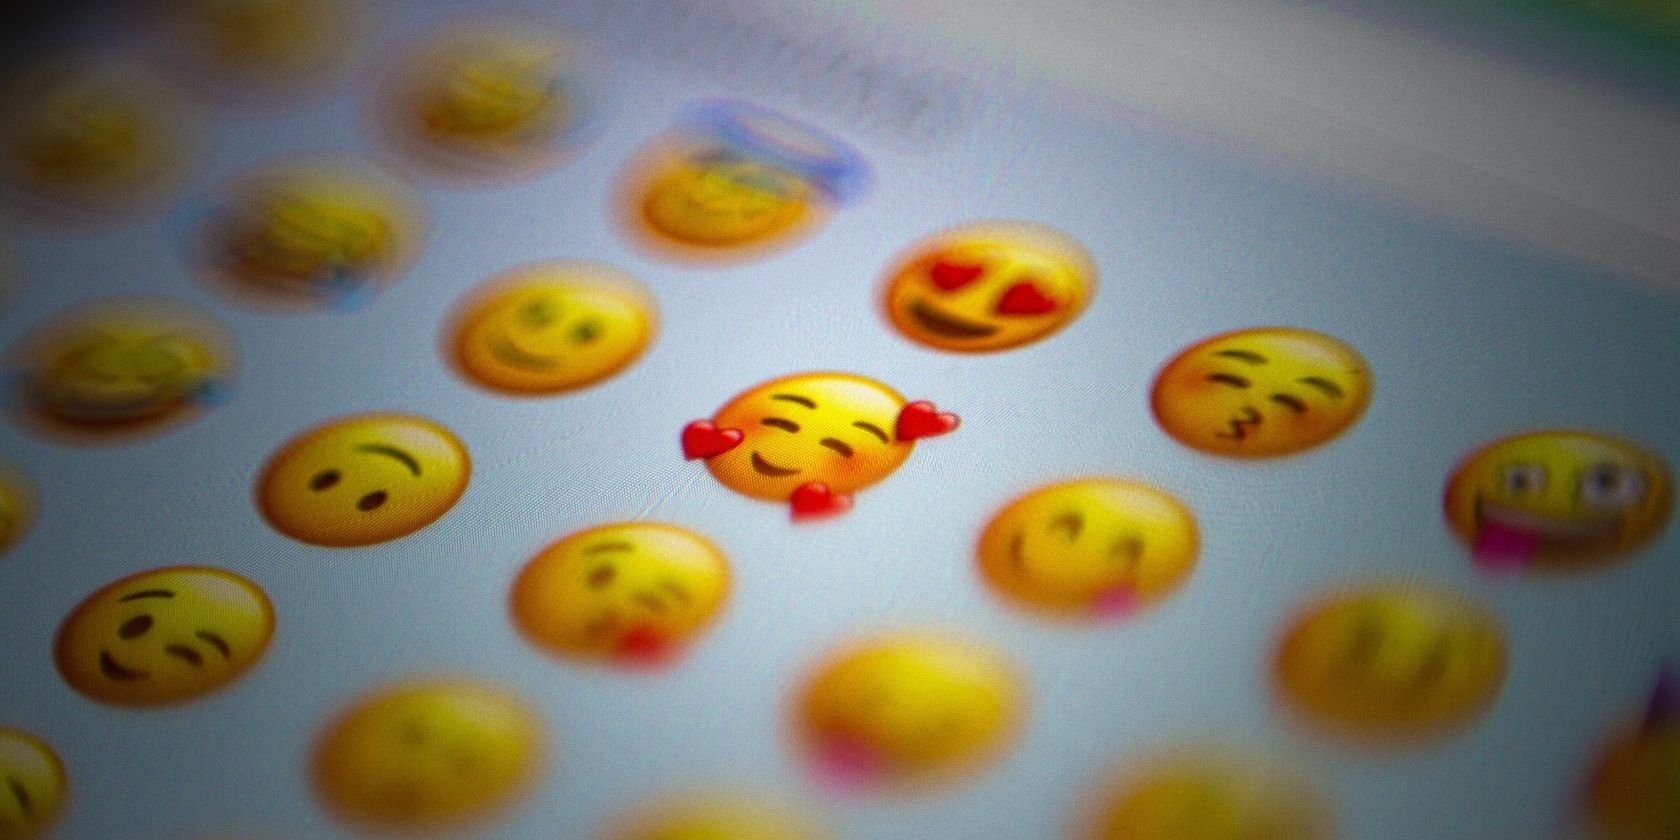 emojis communications feature image